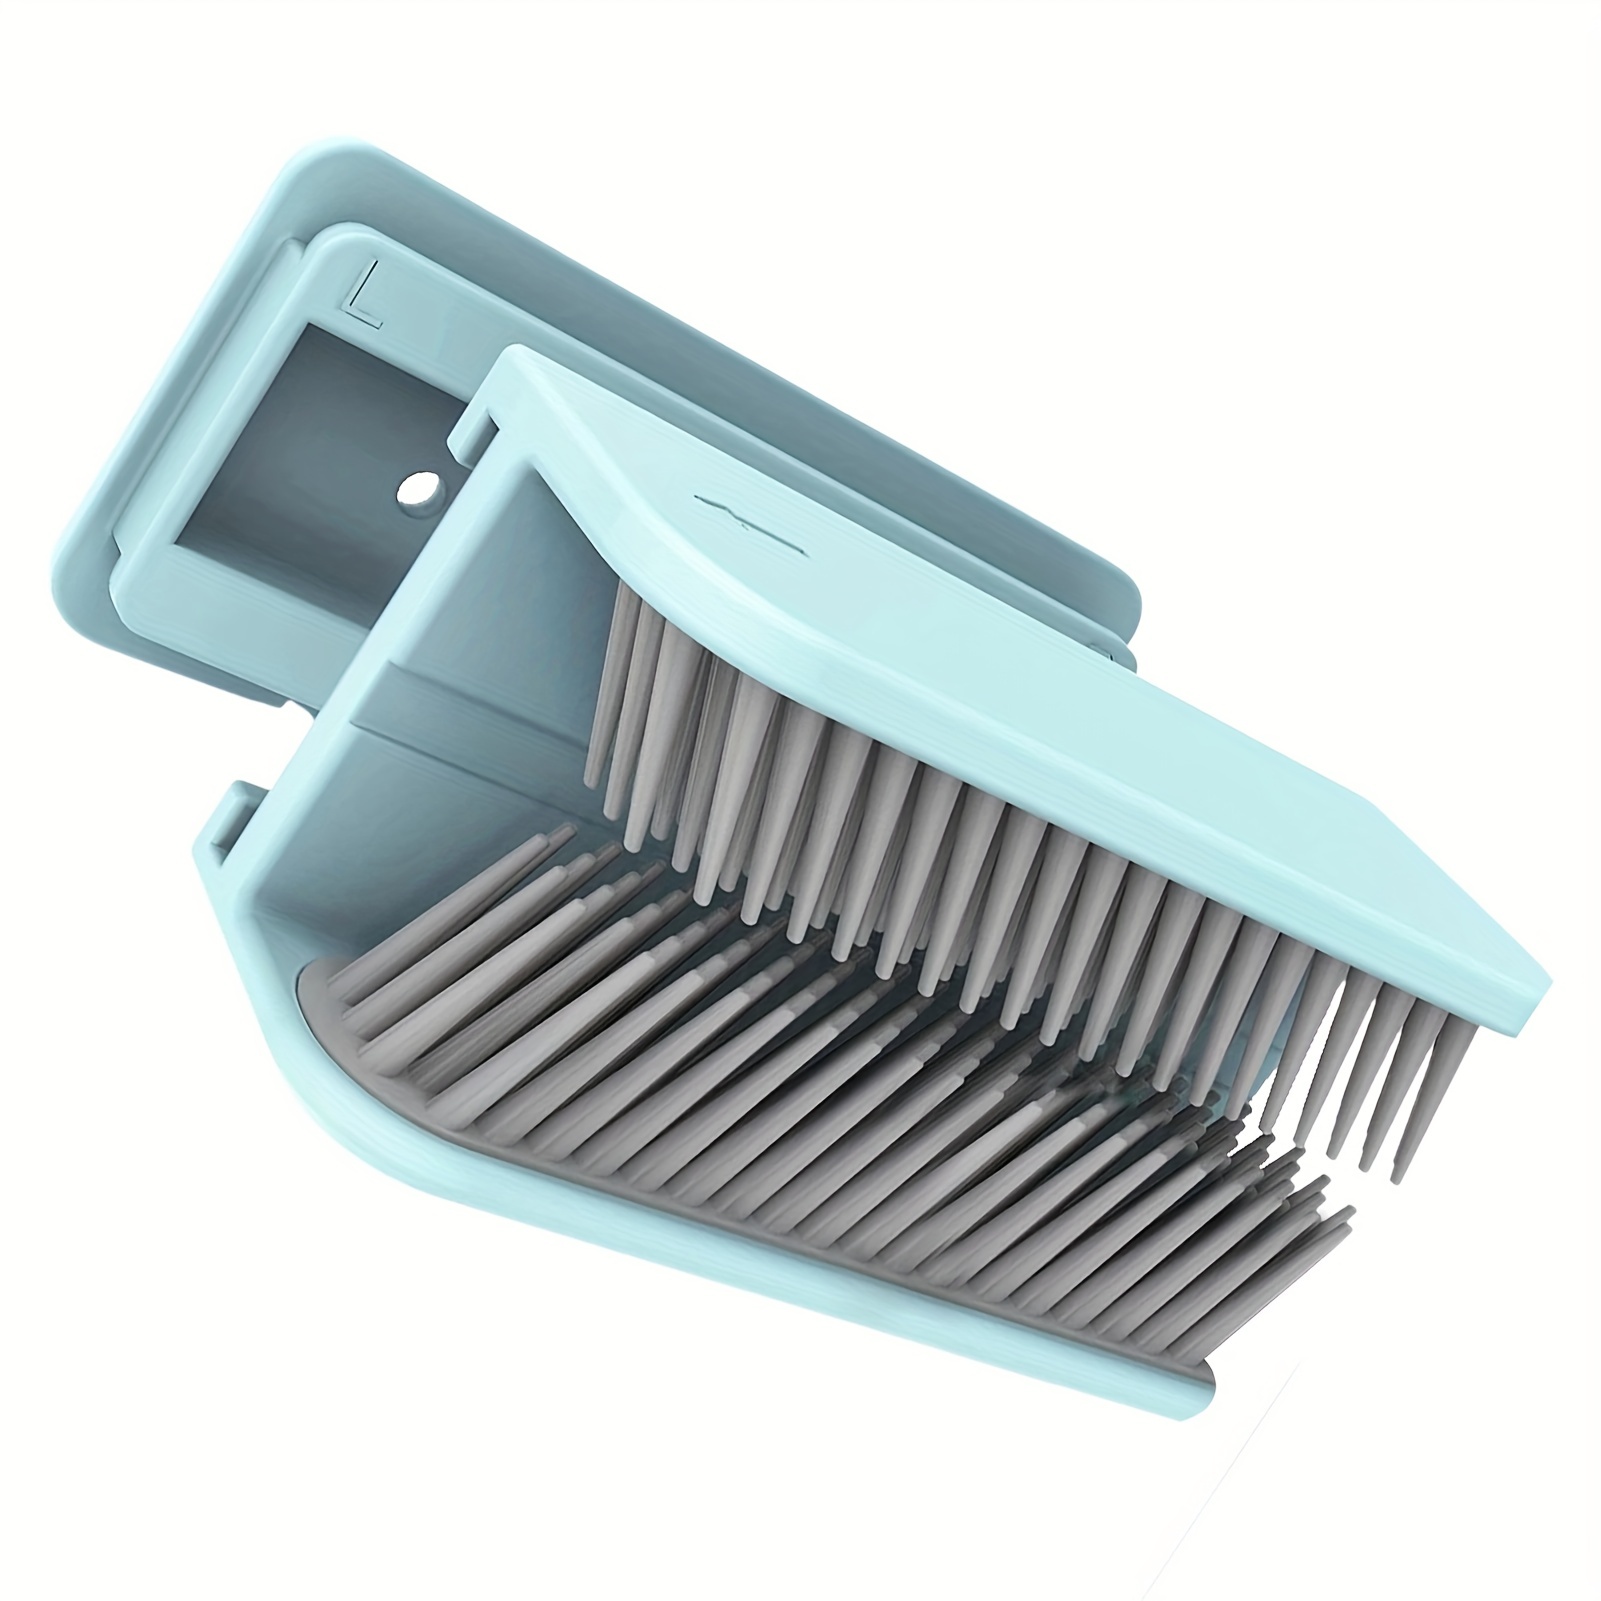 Homotte drain hair catcher/bathtub shower drain hair trap strainer, st